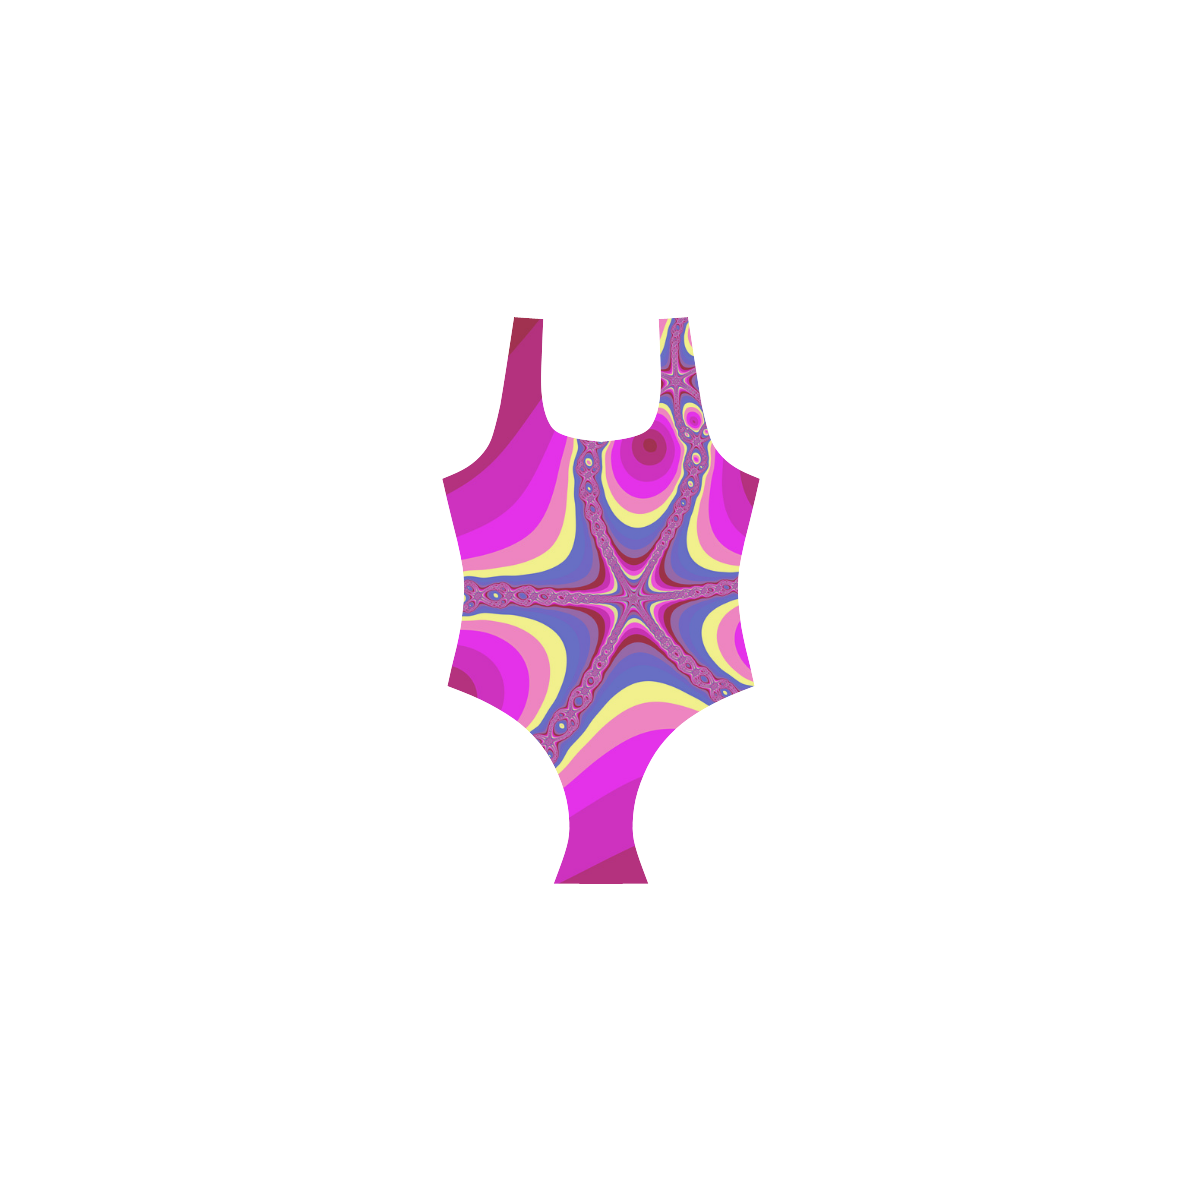 Fractal in pink Vest One Piece Swimsuit (Model S04)